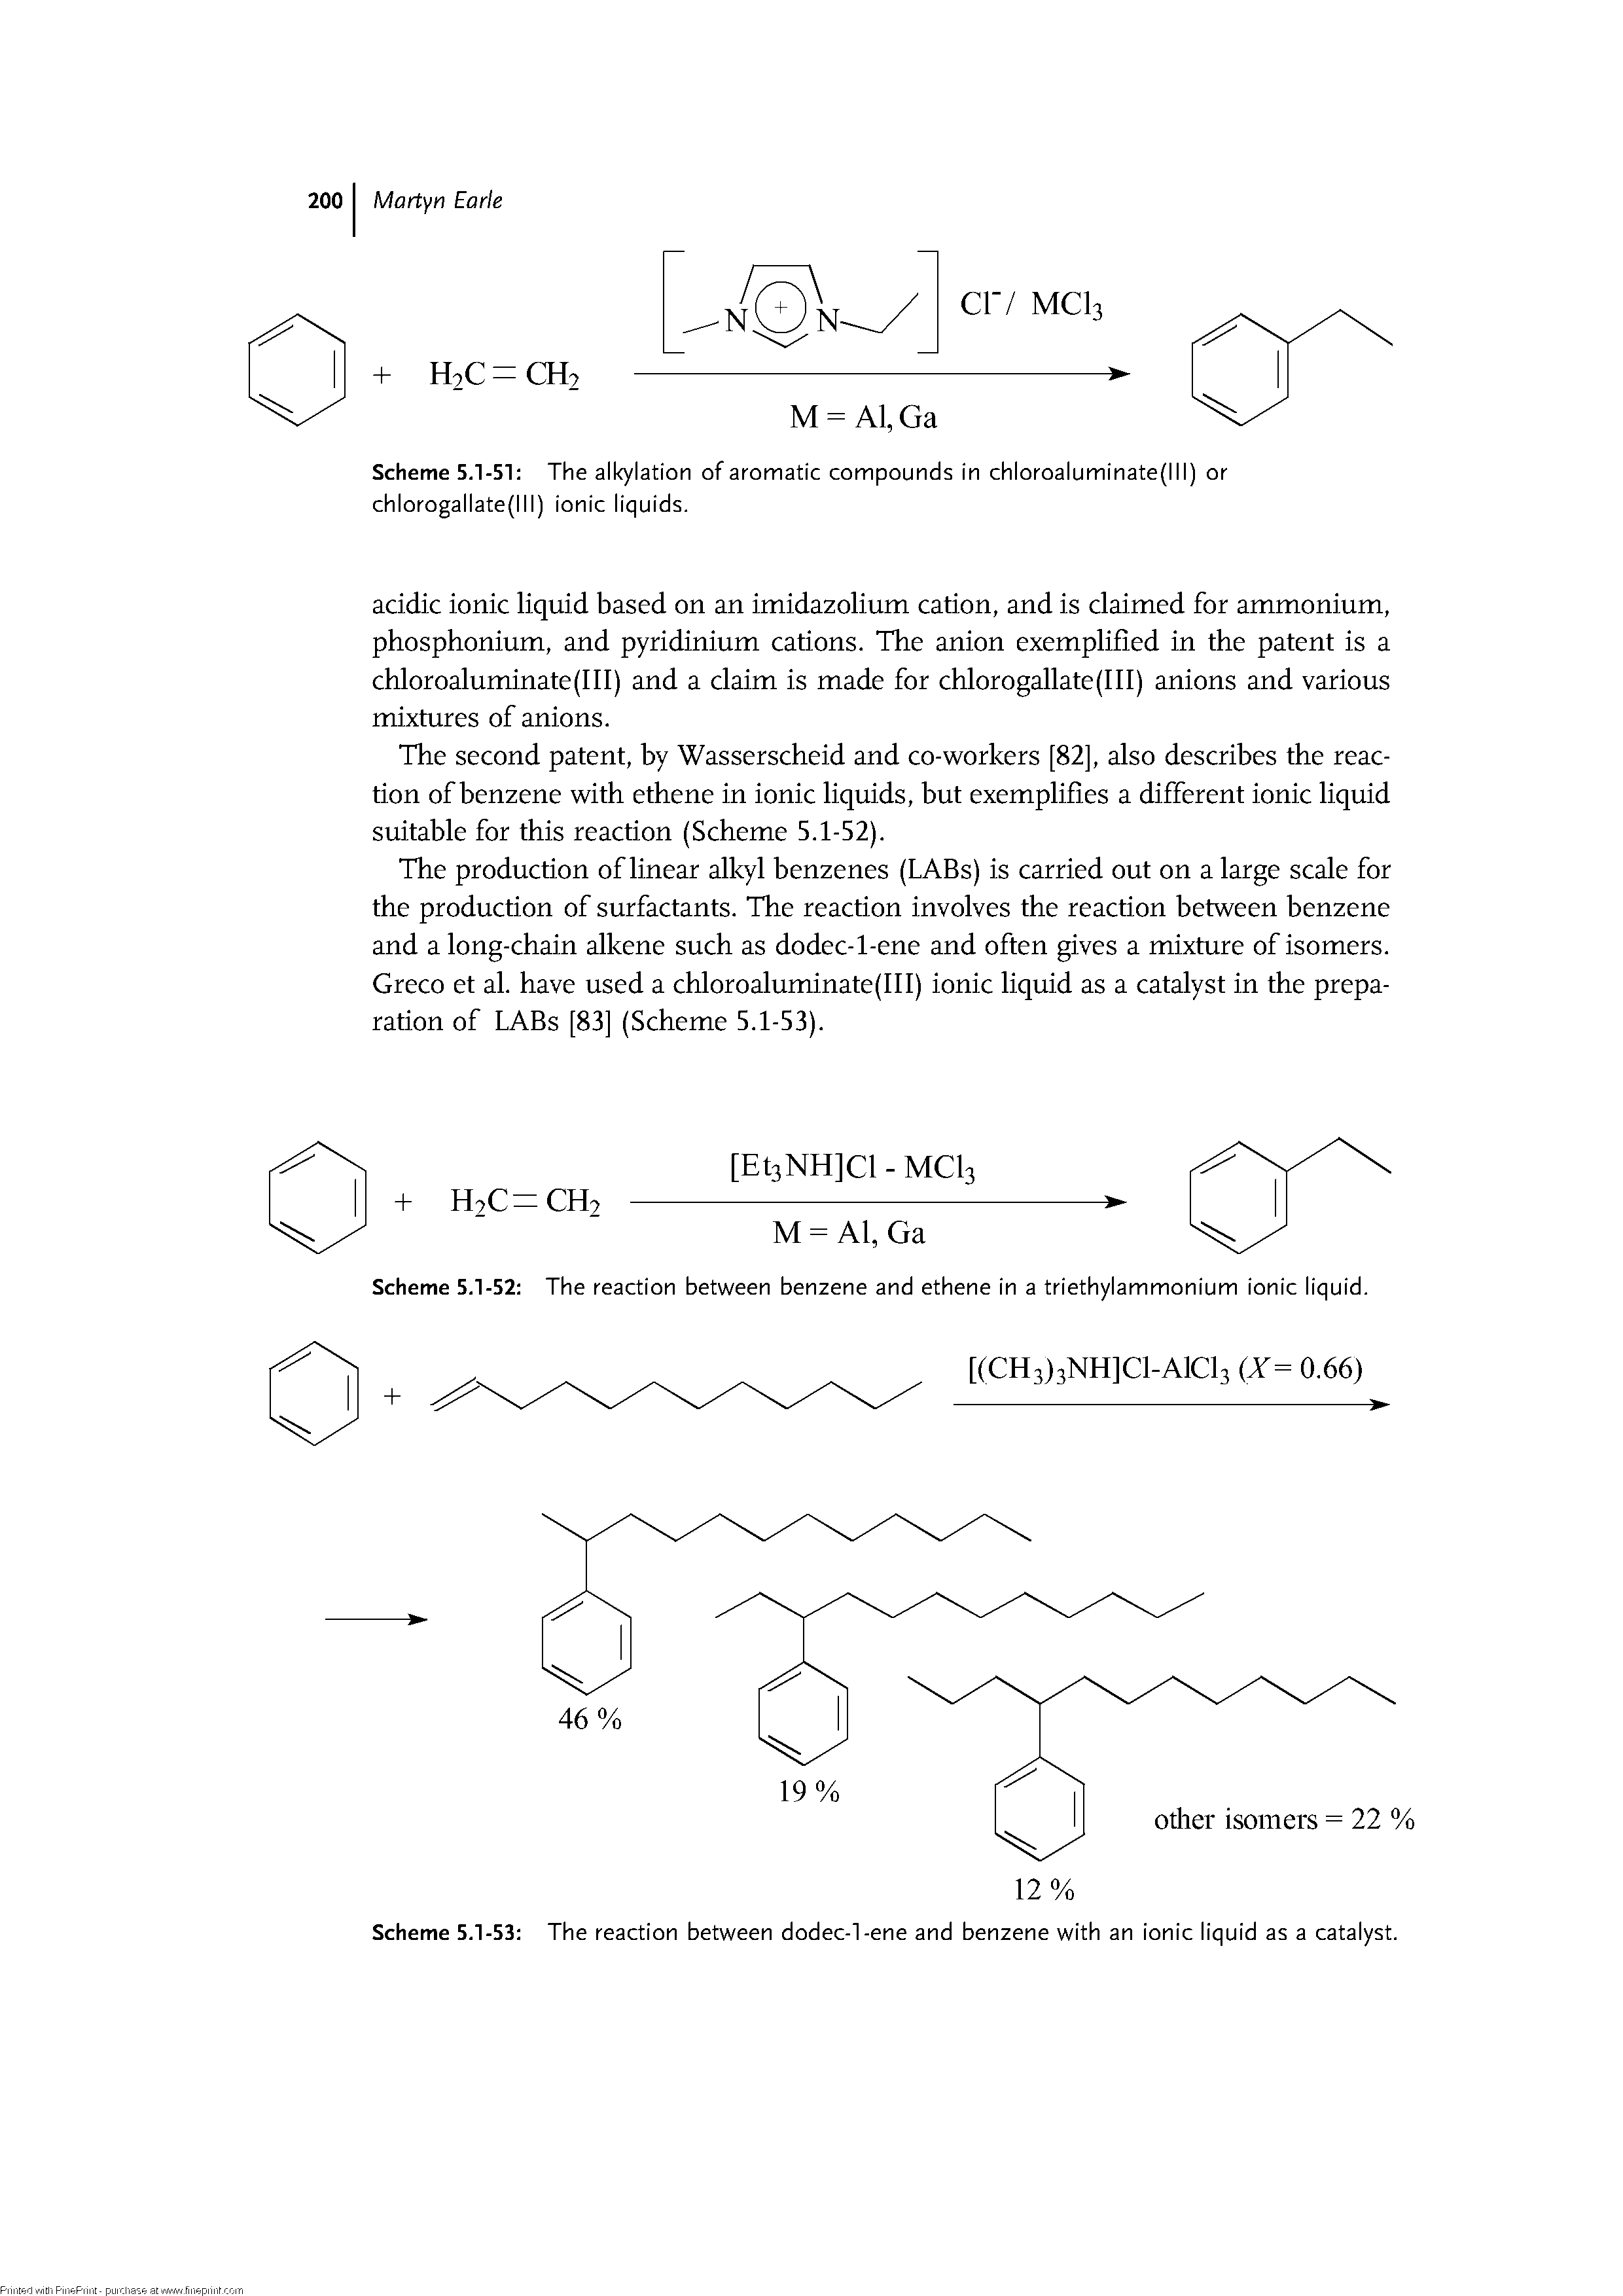 Scheme 5.1-52 The reaction between benzene and ethene in a triethylammonium ionic liquid.